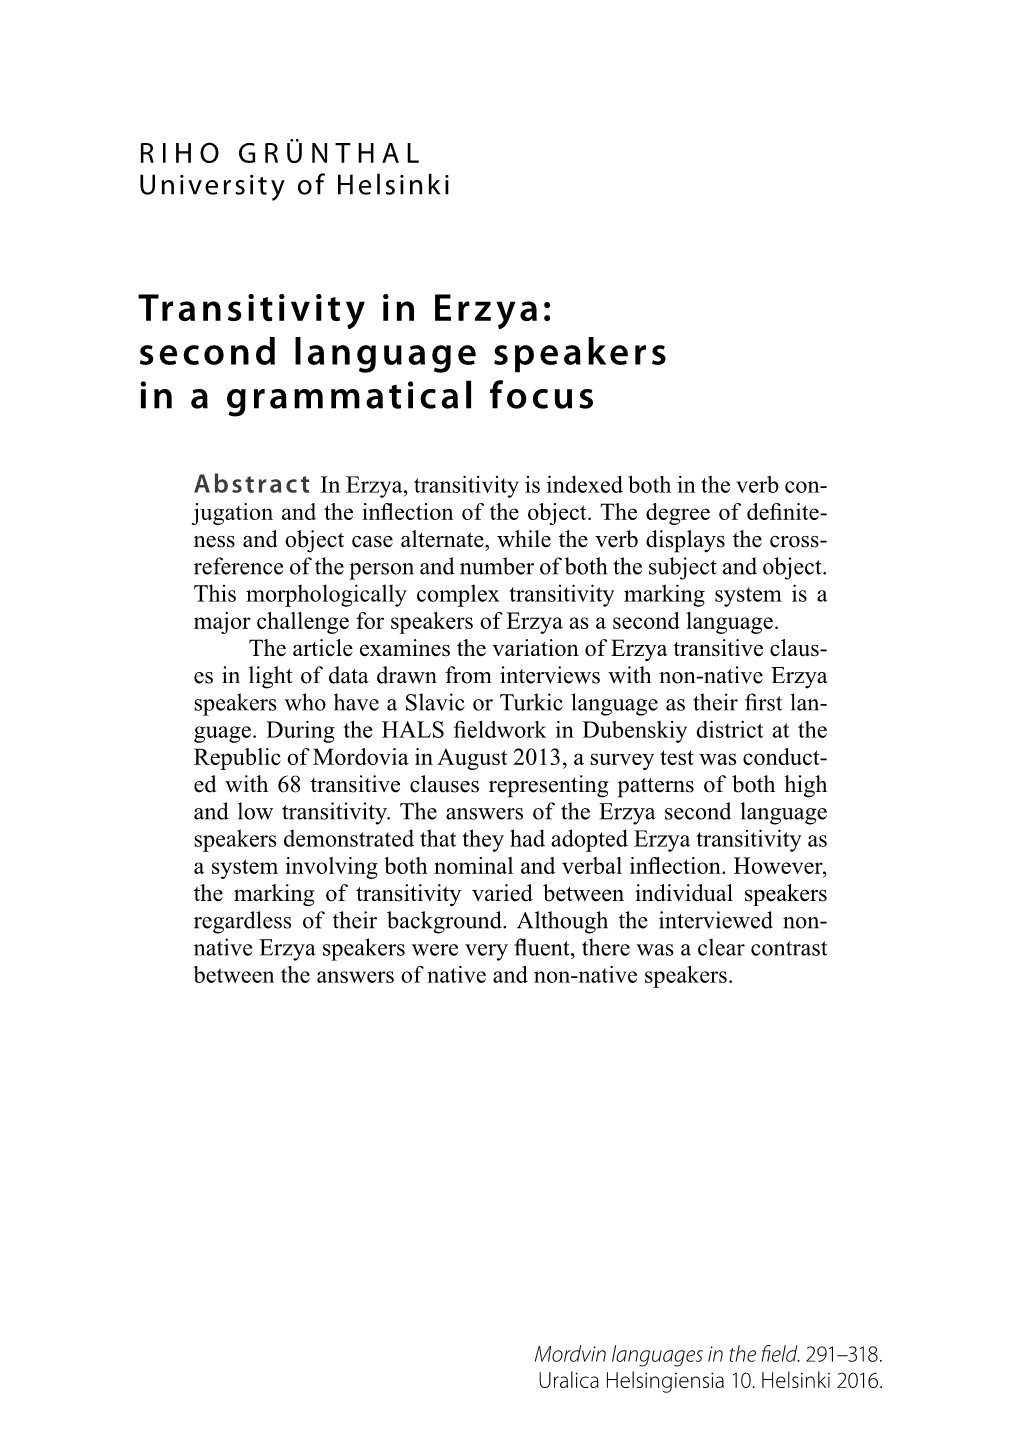 Transitivity in Erzya: Second Language Speakers in a Grammatical Focus